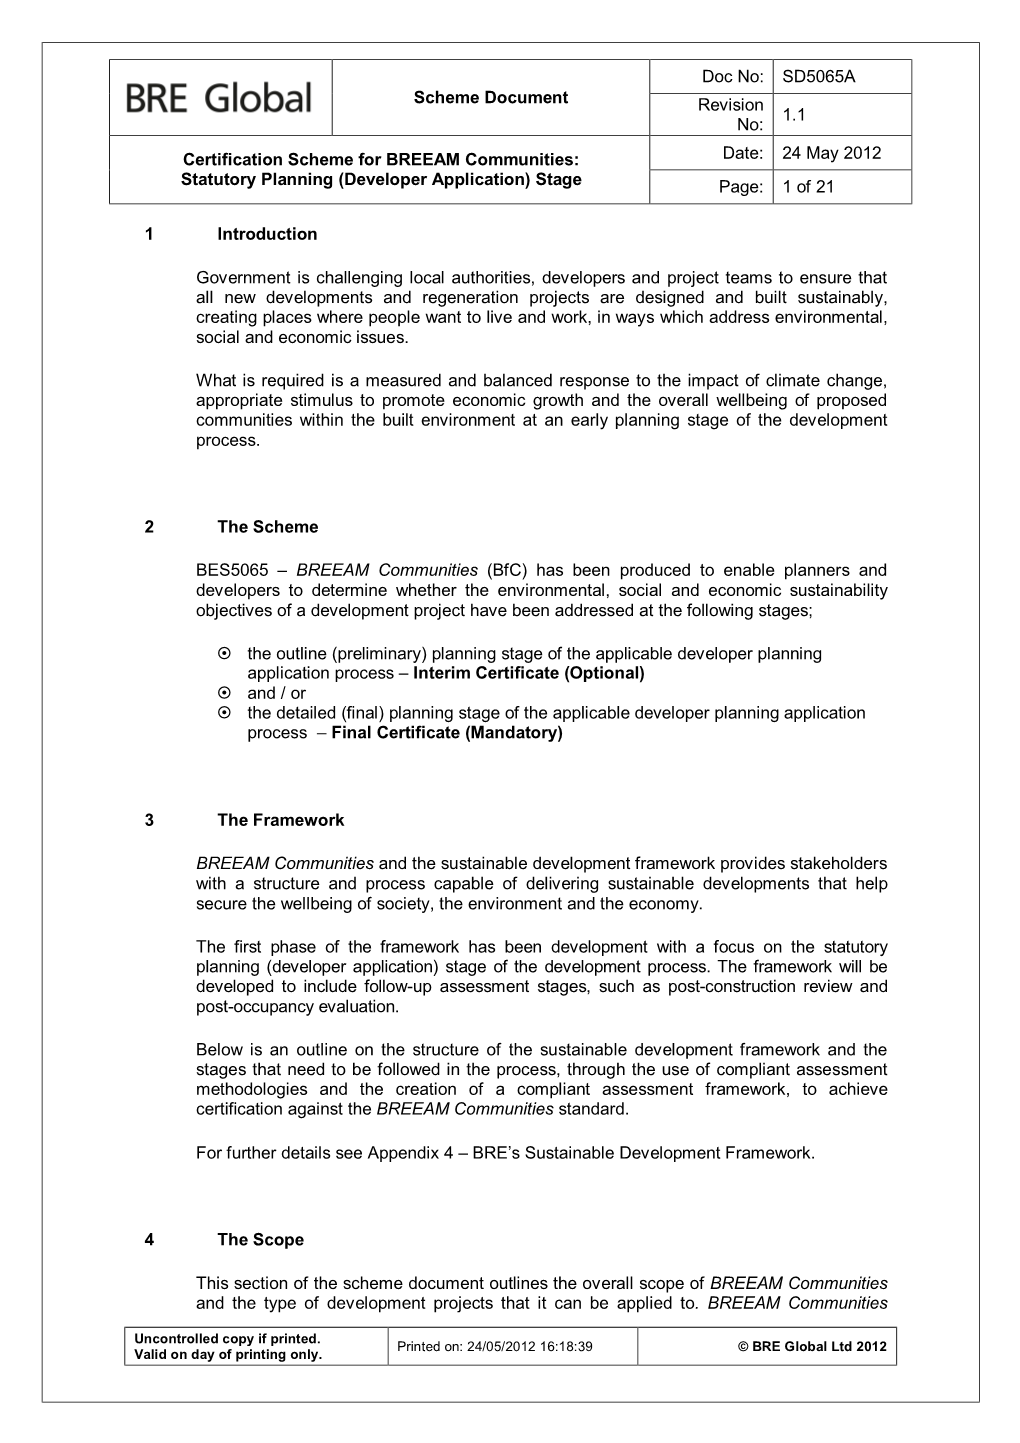 Scheme Document Doc No: SD5065A Revision No: 1.1 Certification Scheme for BREEAM Communities: Statutory Planning (Developer